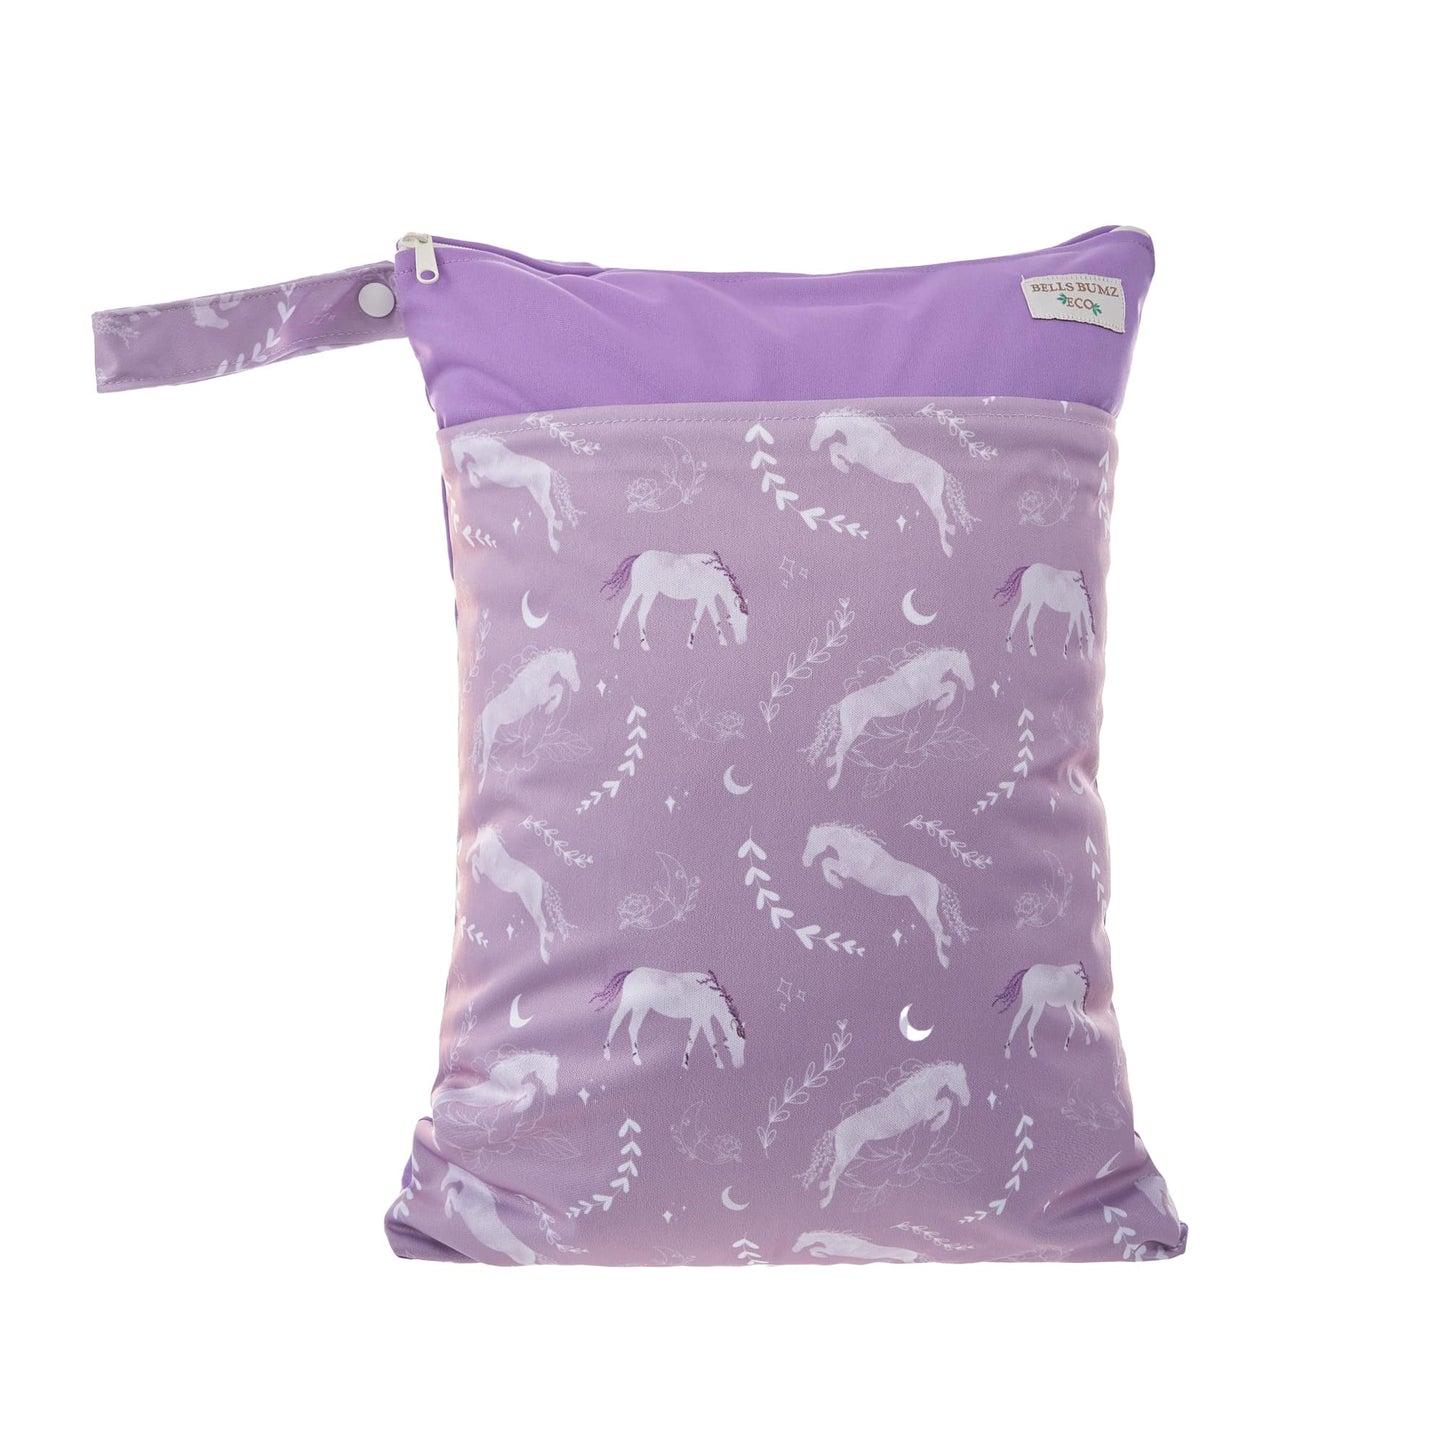 Medium wet bag with a pink horse print.